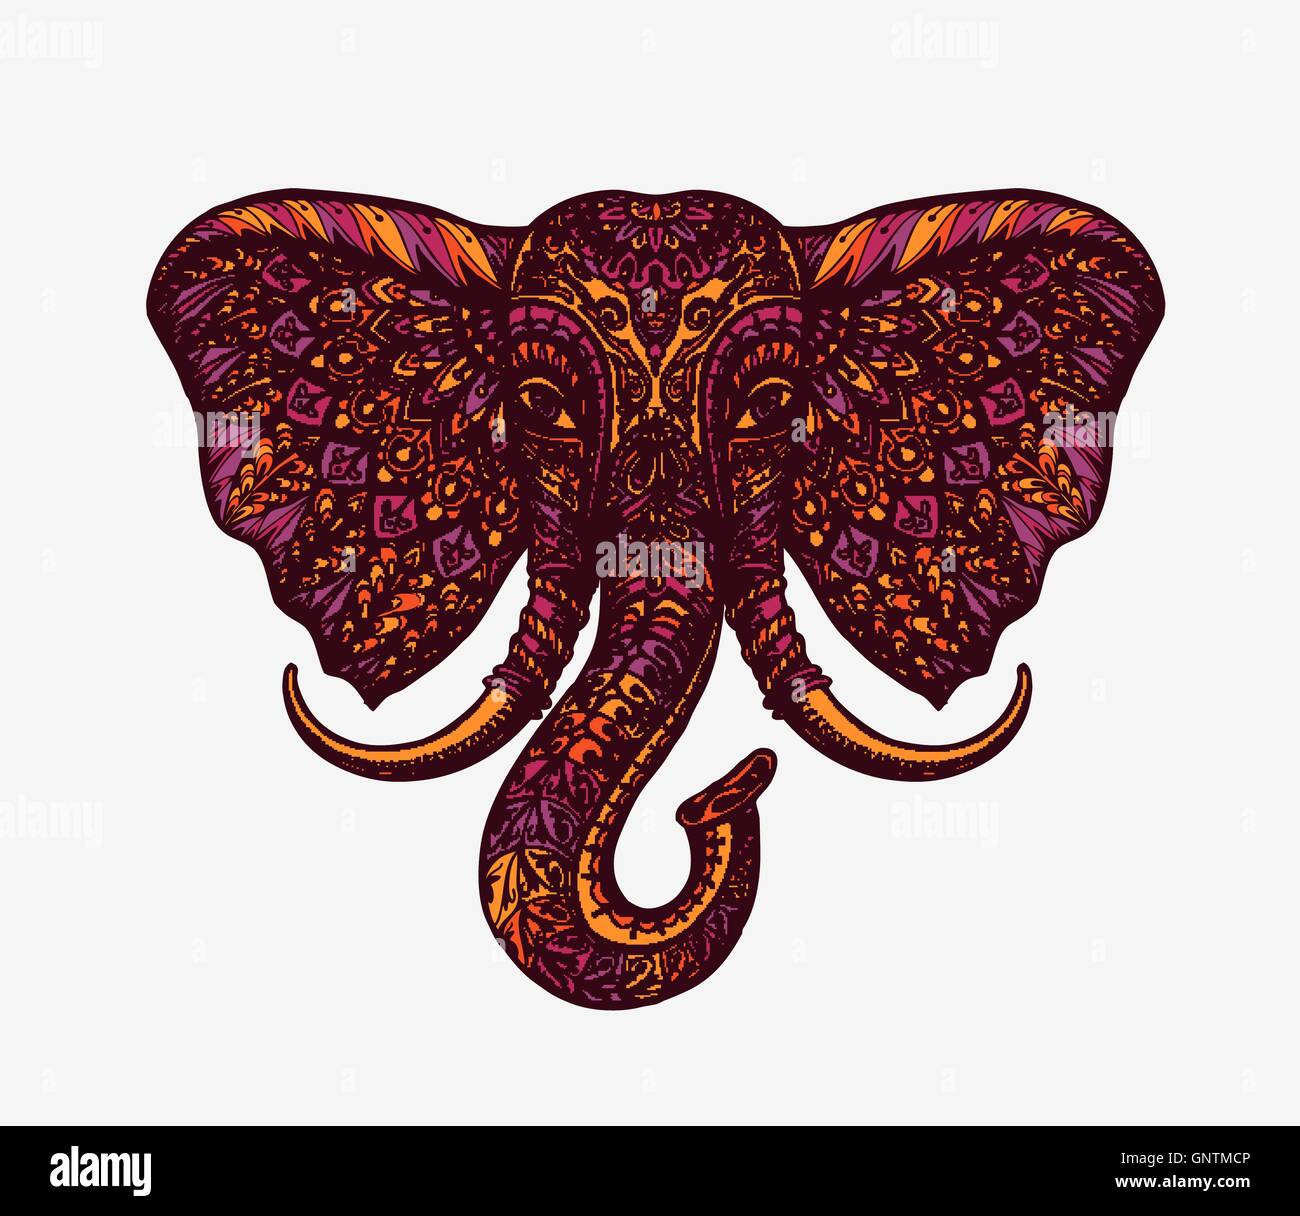 Festliche indische Elefant. Ethno-Mustern. Vektor-illustration Stock Vektor